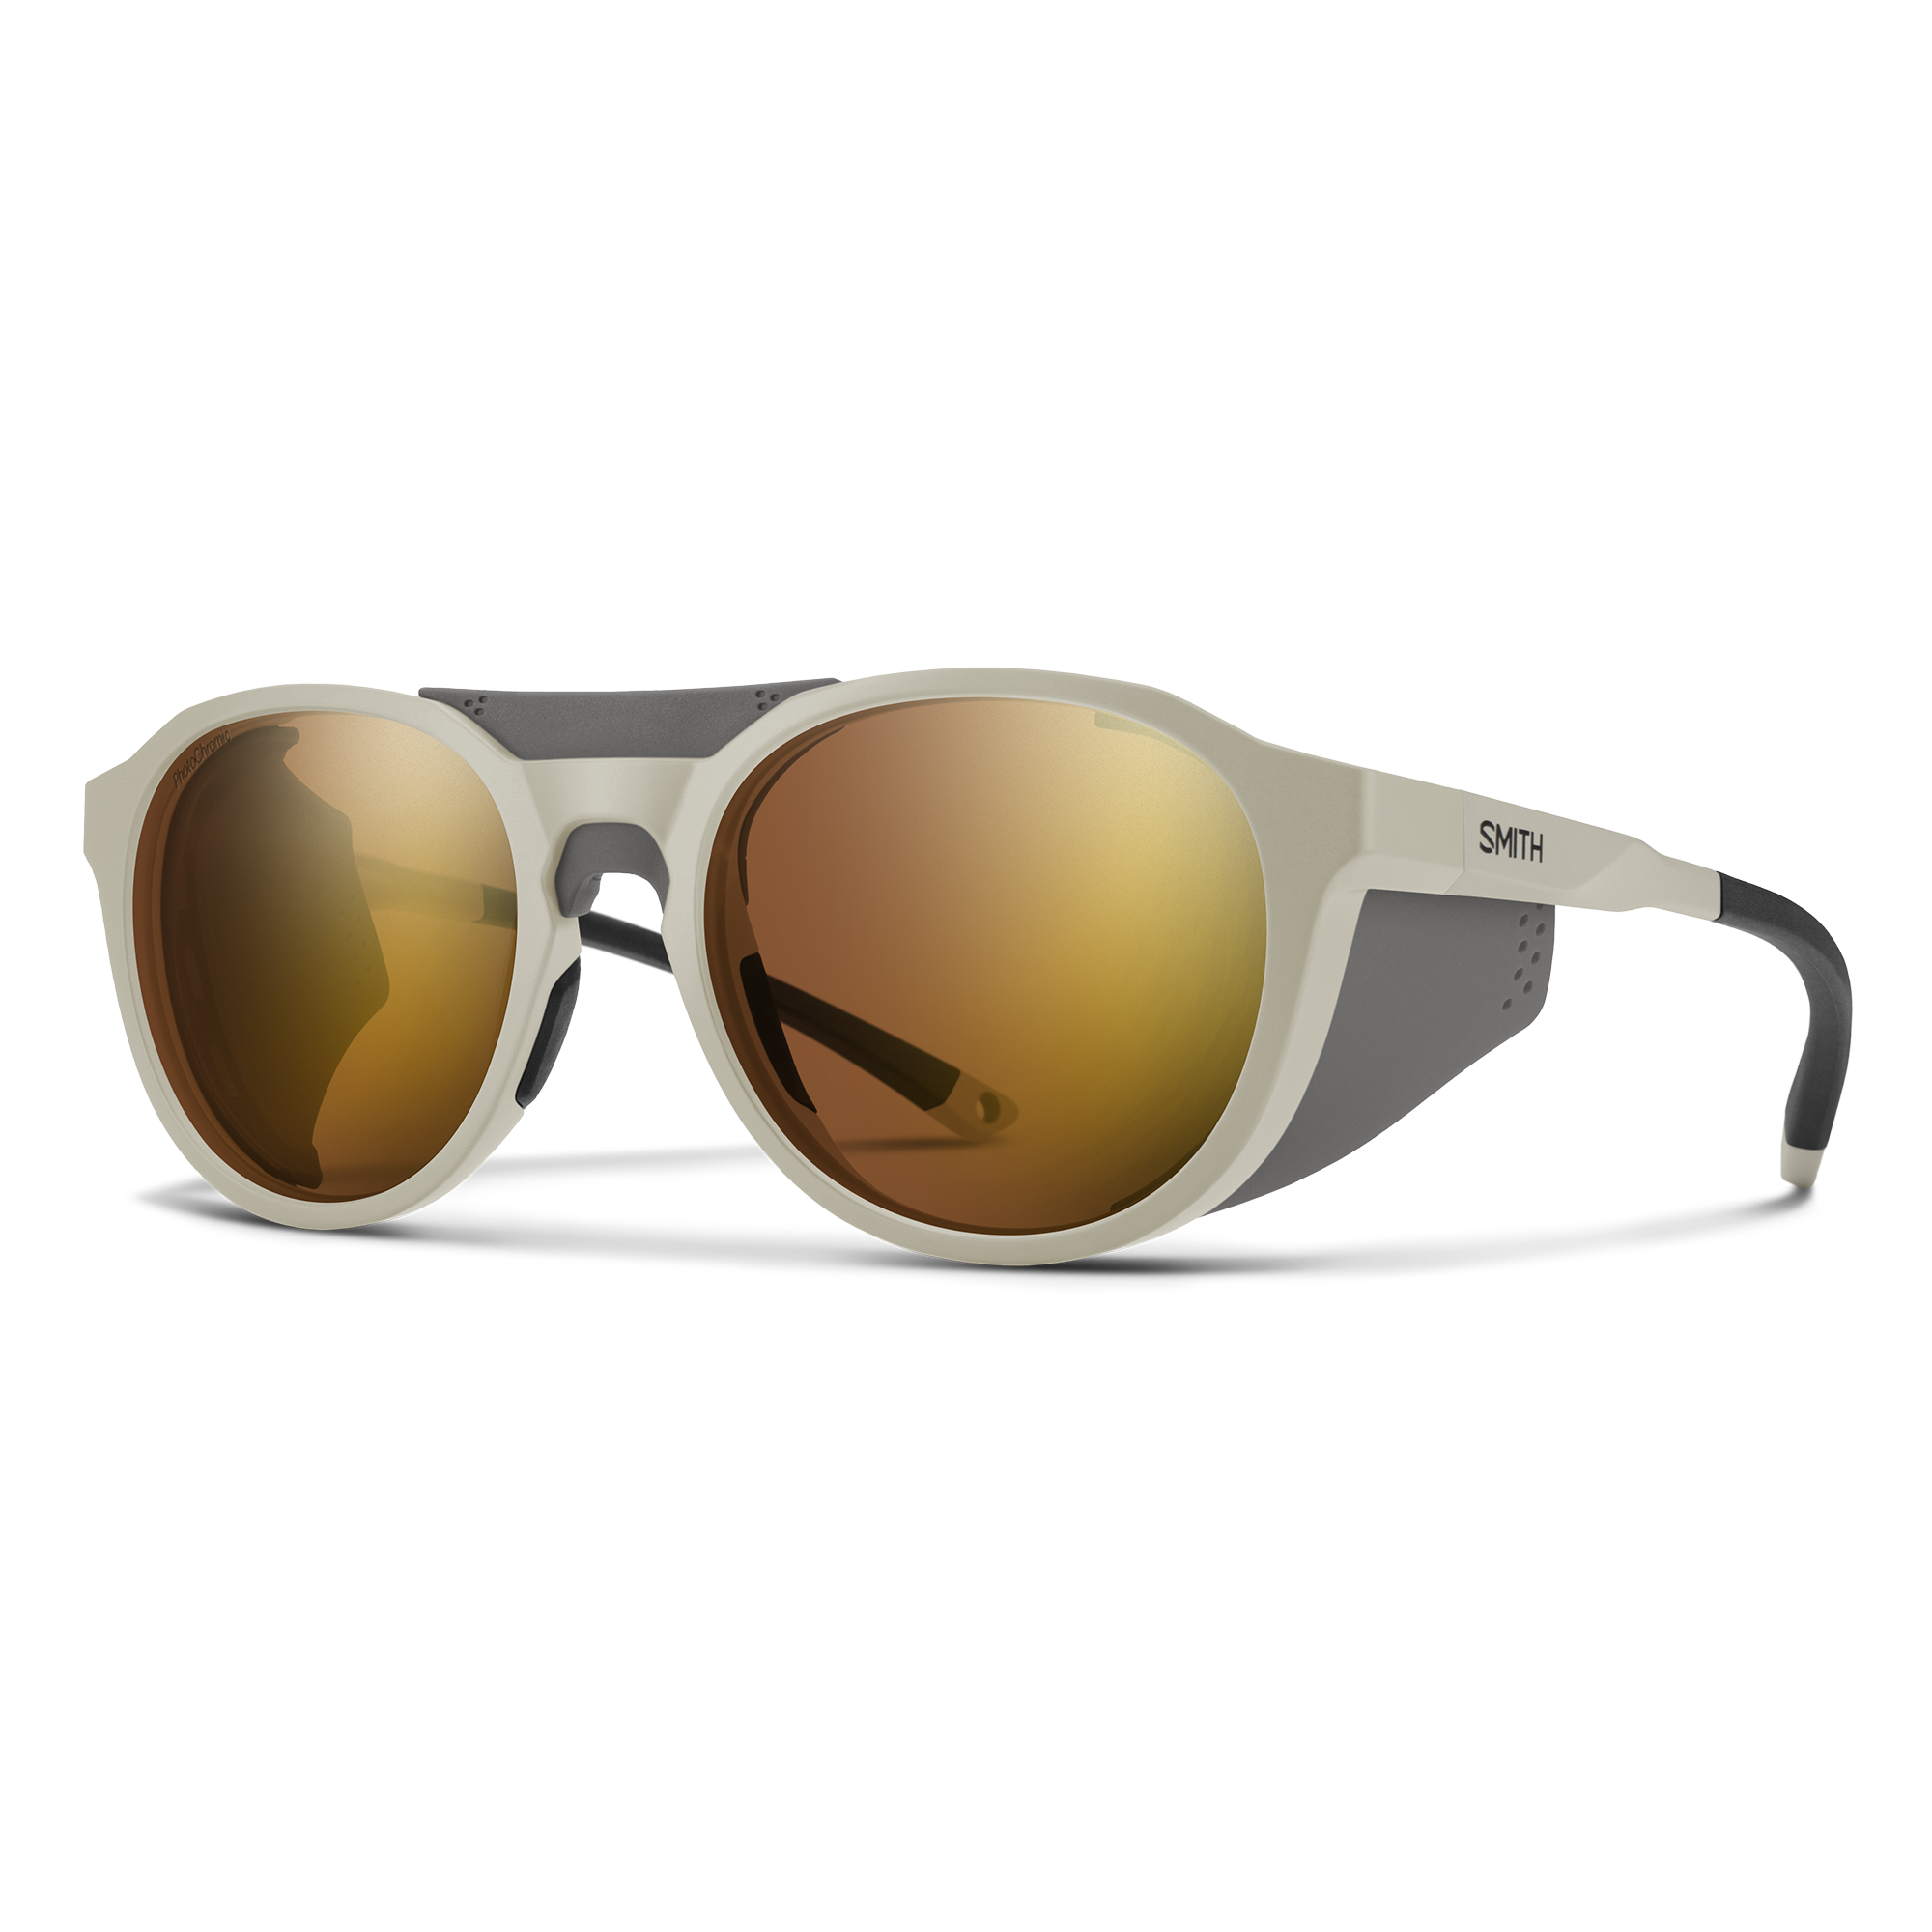 New Sunglasses, Smith Optics